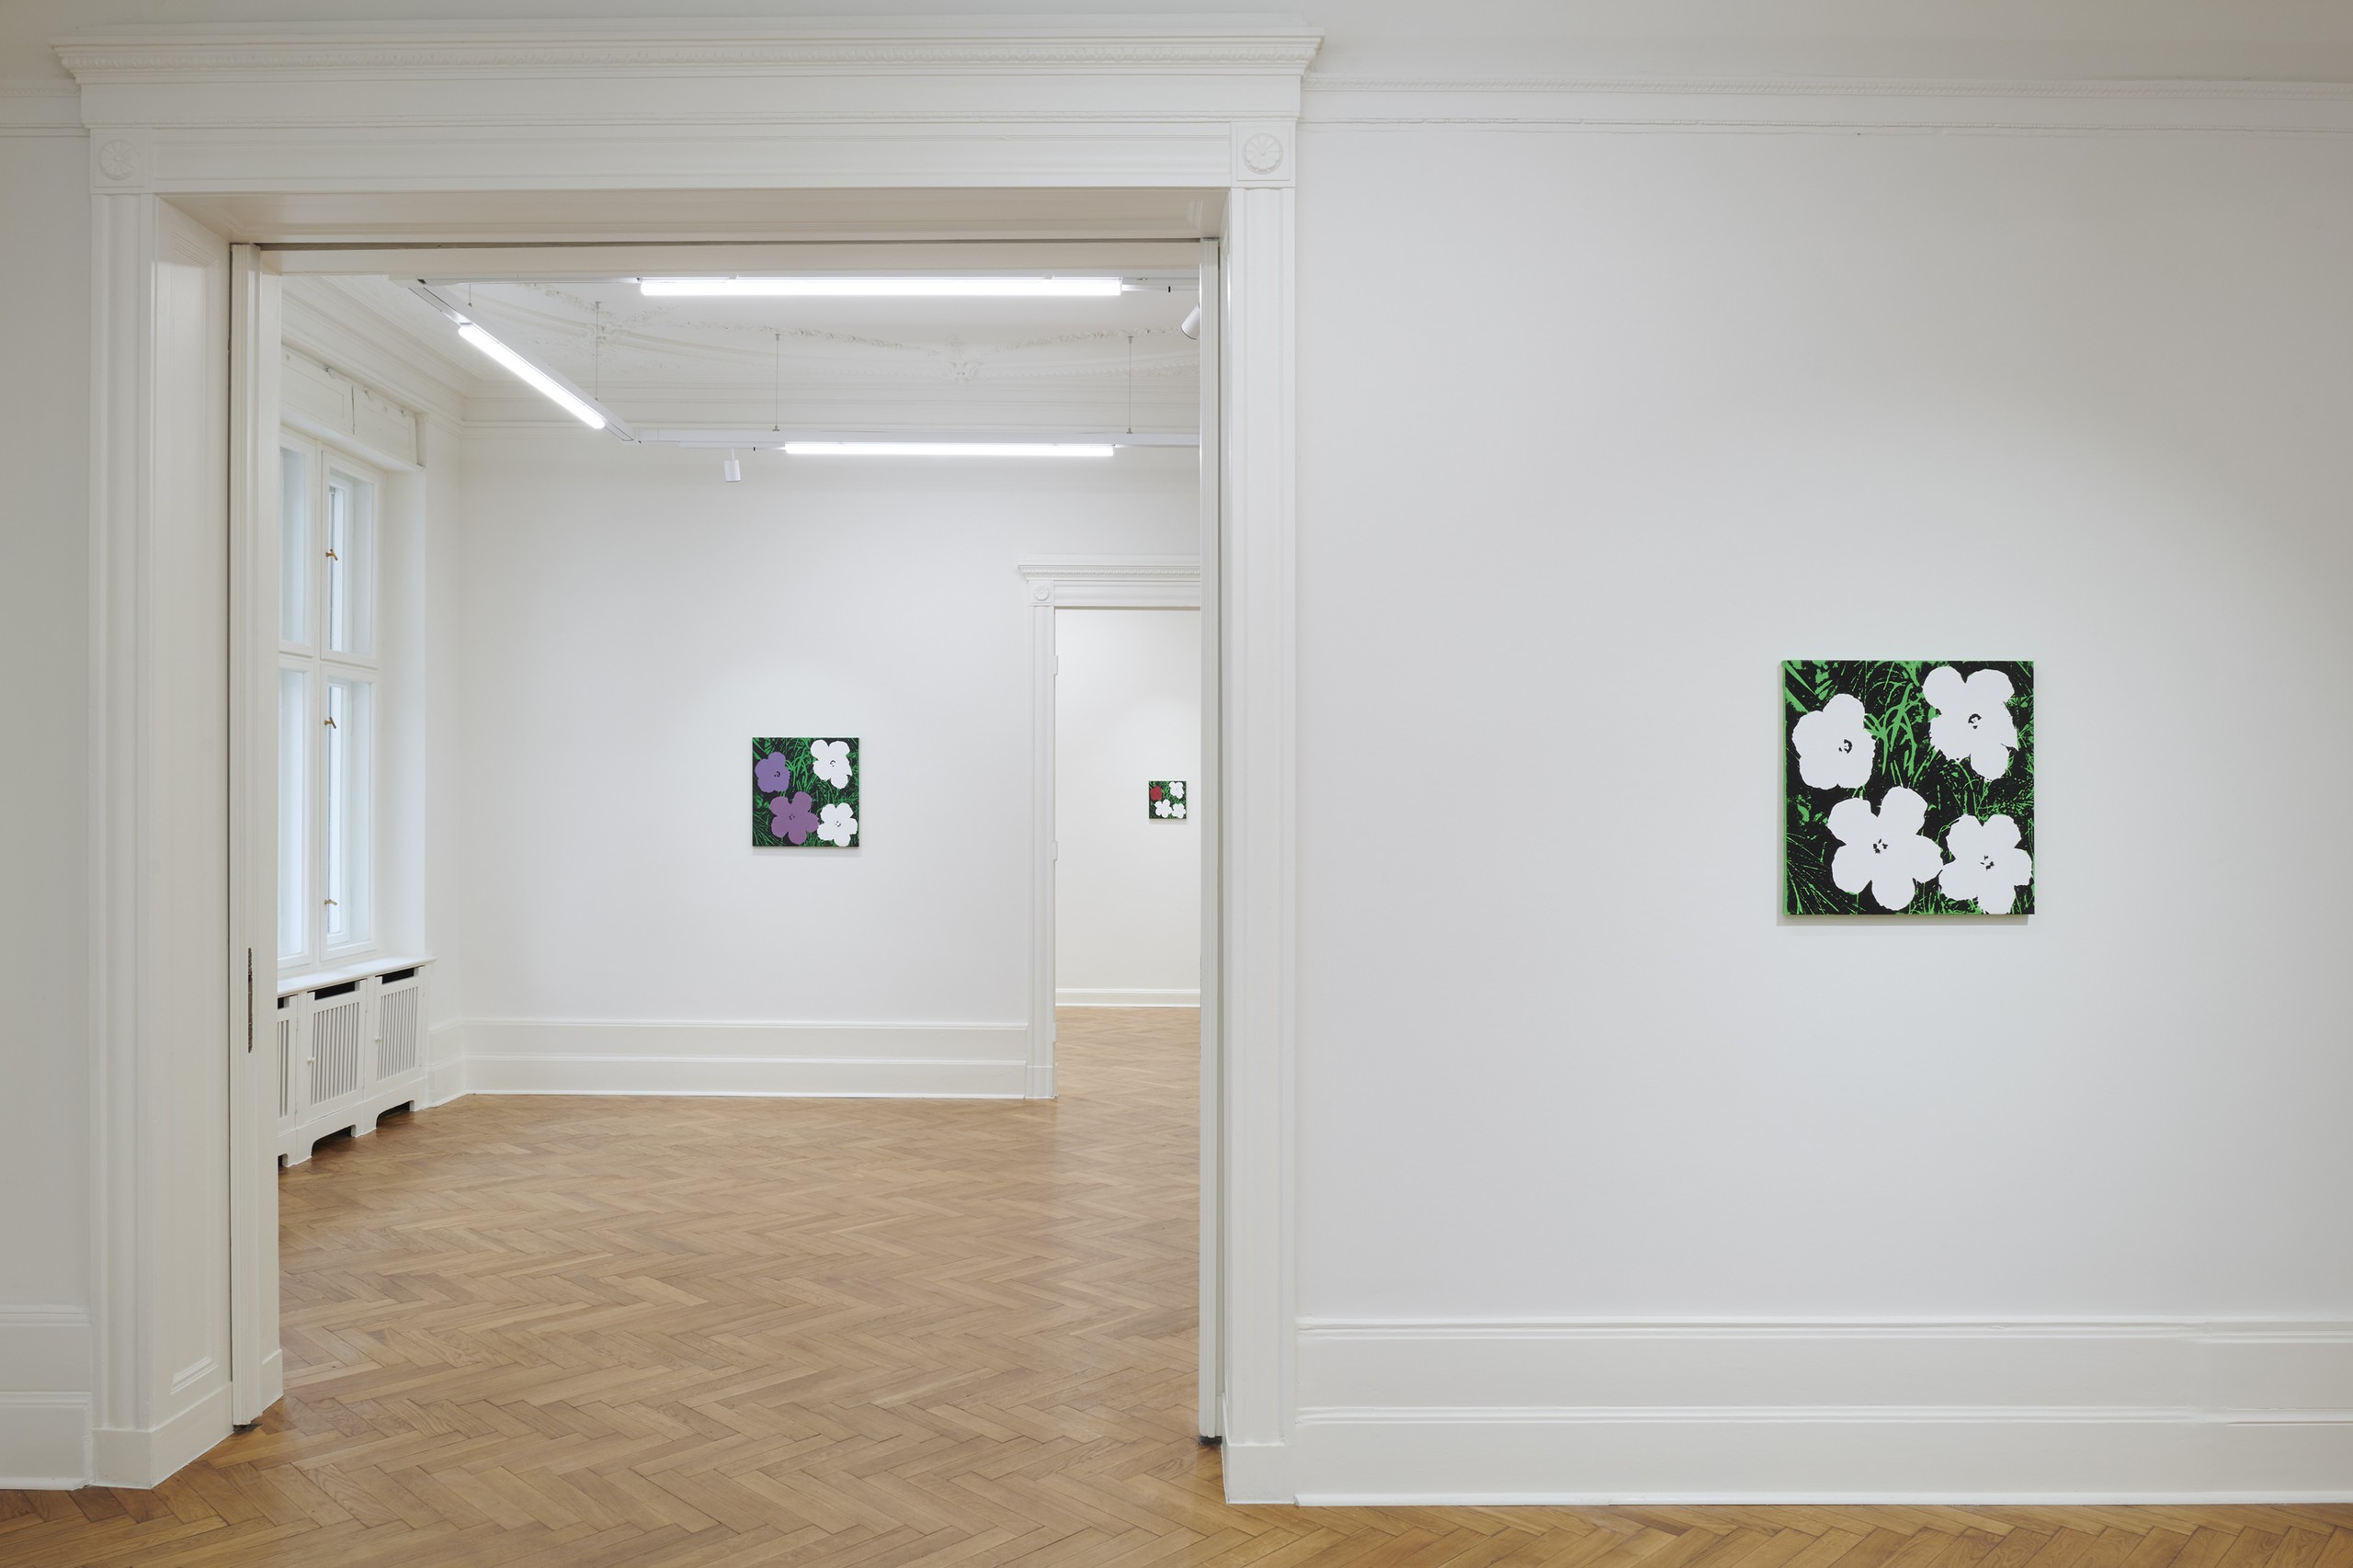 Installation view, Sturtevant, Société, Berlin, 2020